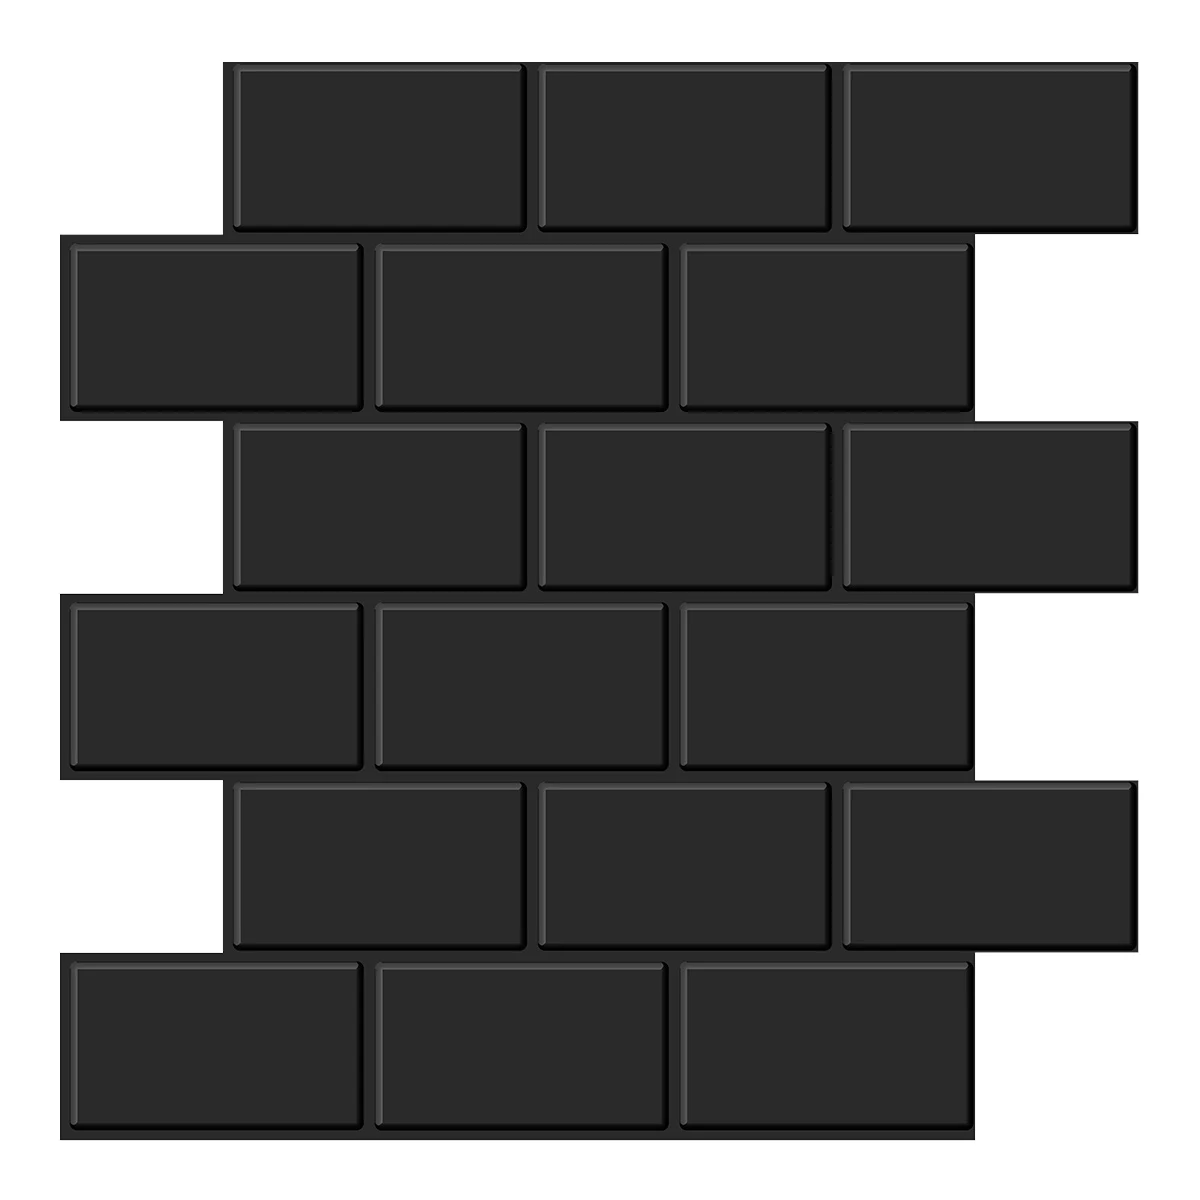 

Brick Ceramic Tile Wall Sticker Black Tiles 3D DIY Self Adhesive Wall Stickers Waterproof Decor Wallpaper For Living Room